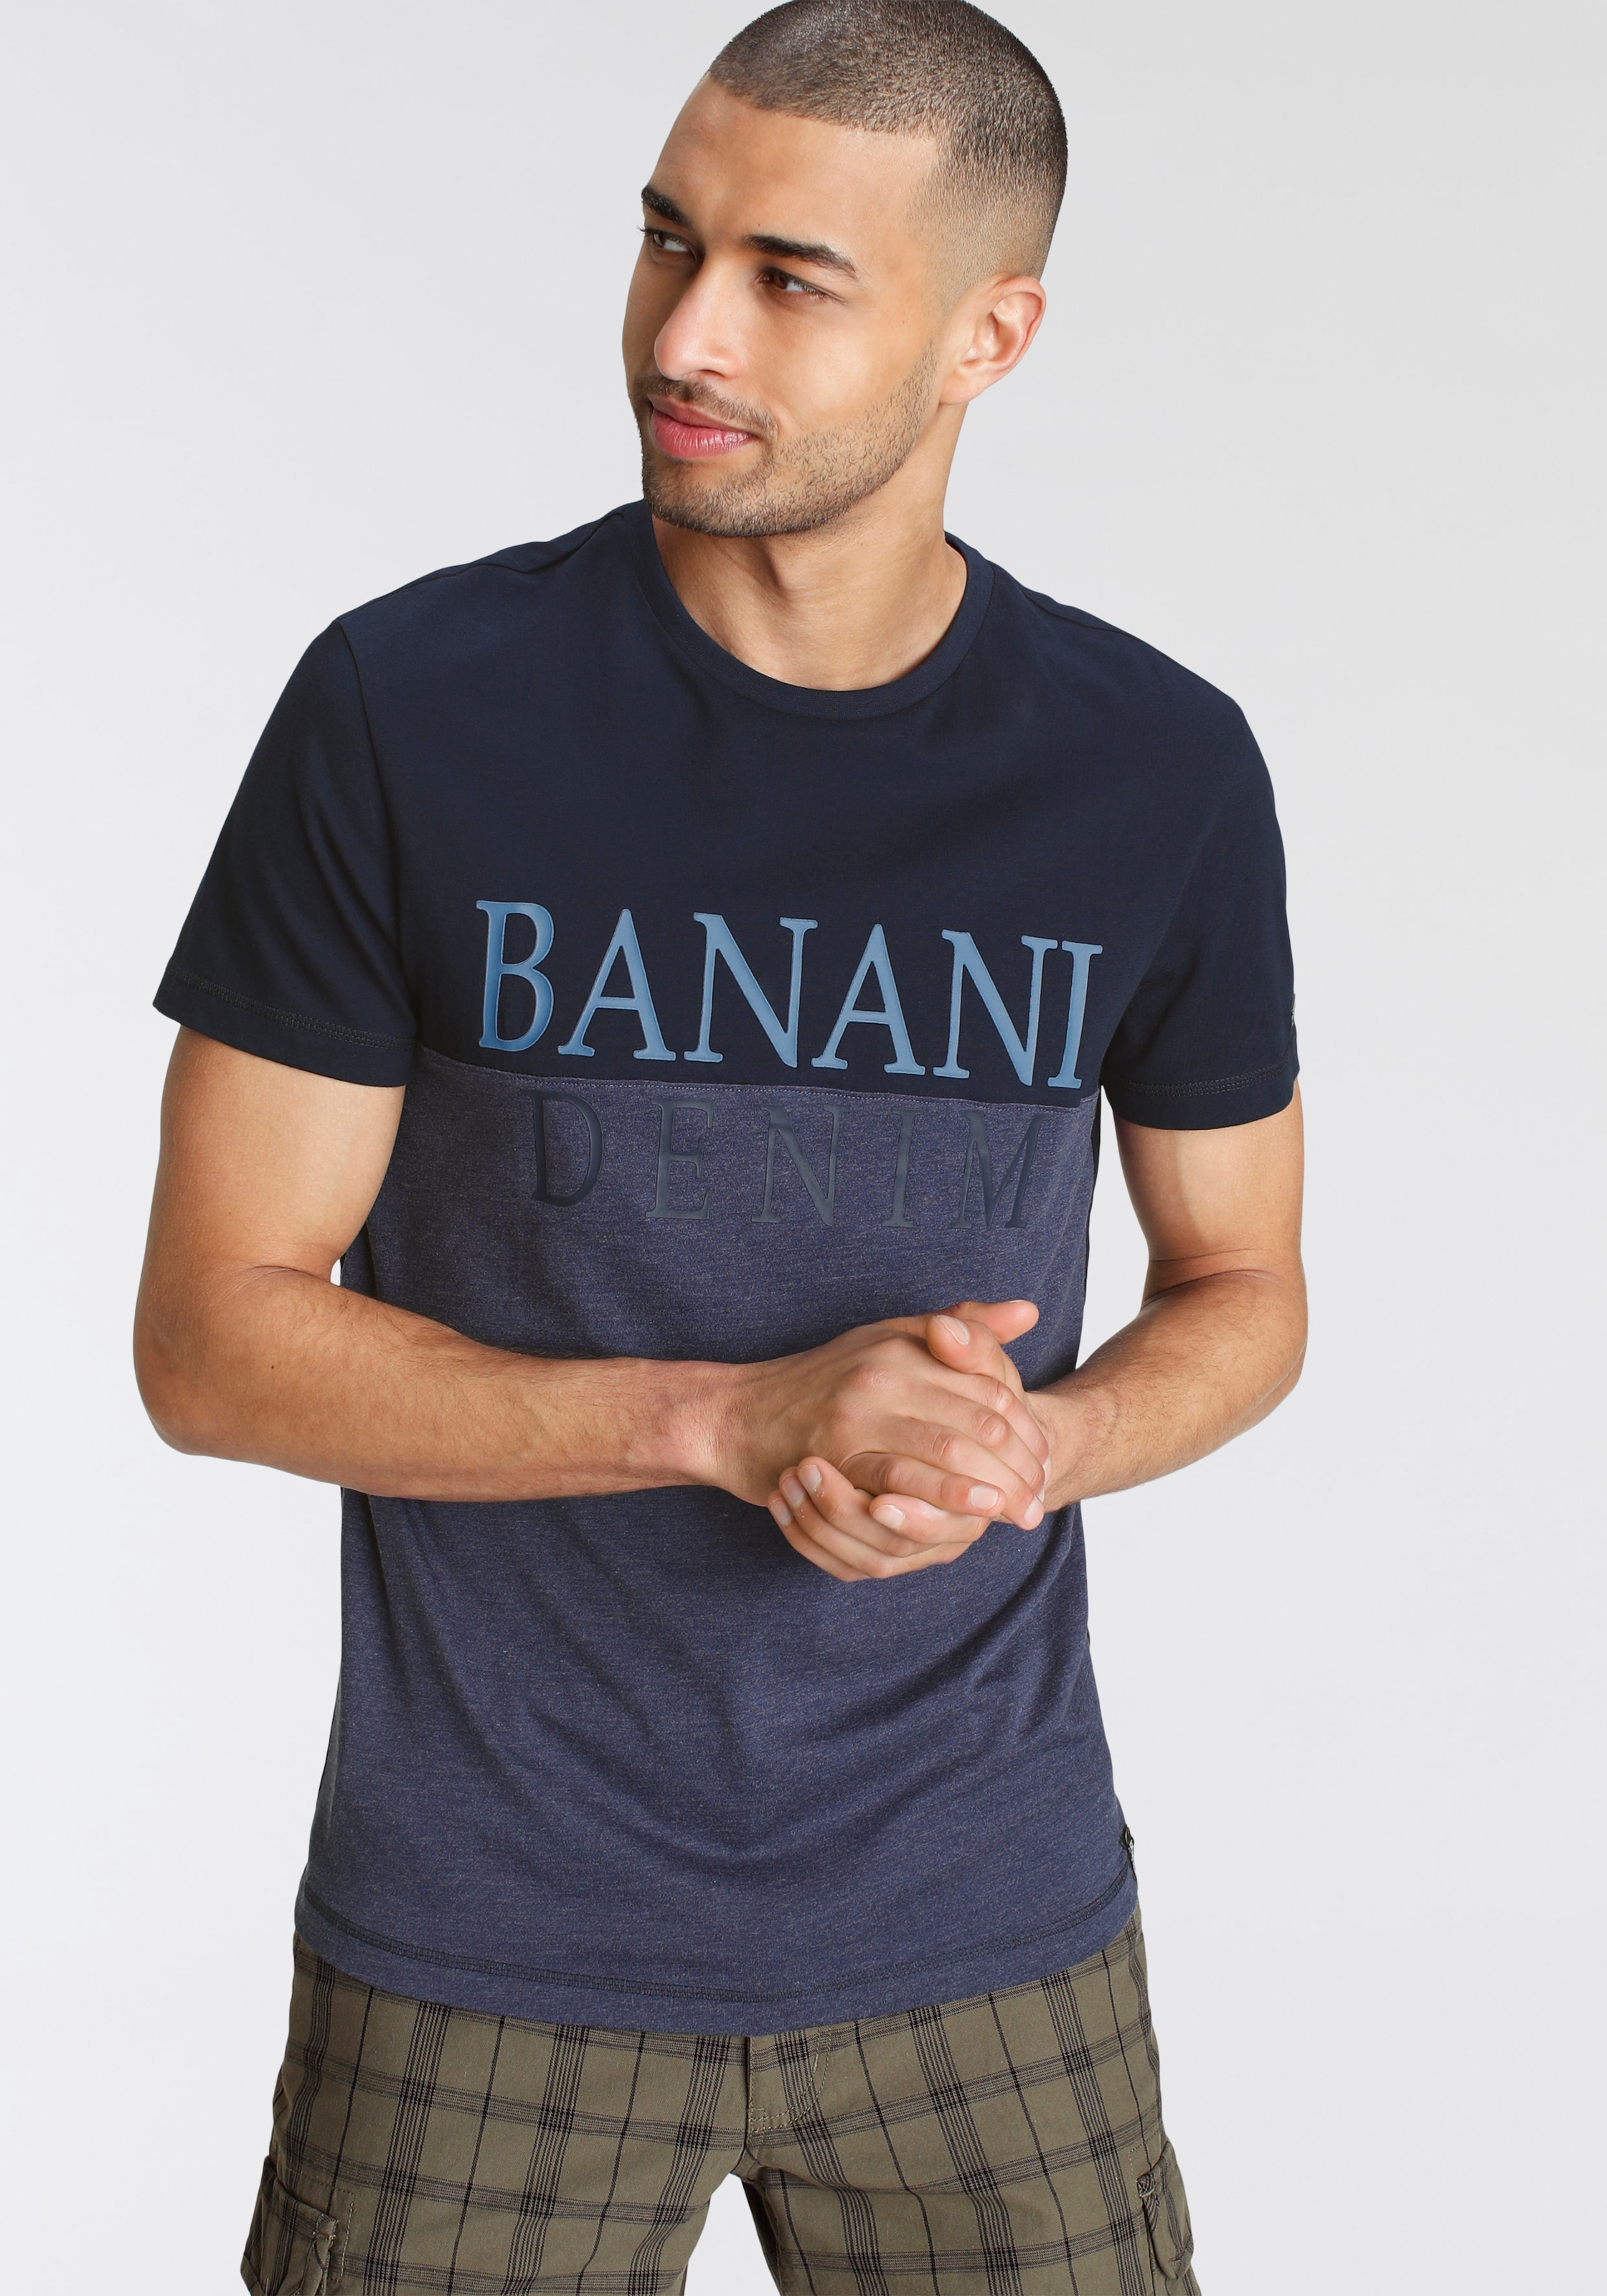 Bruno bei T-Shirt ♕ Banani